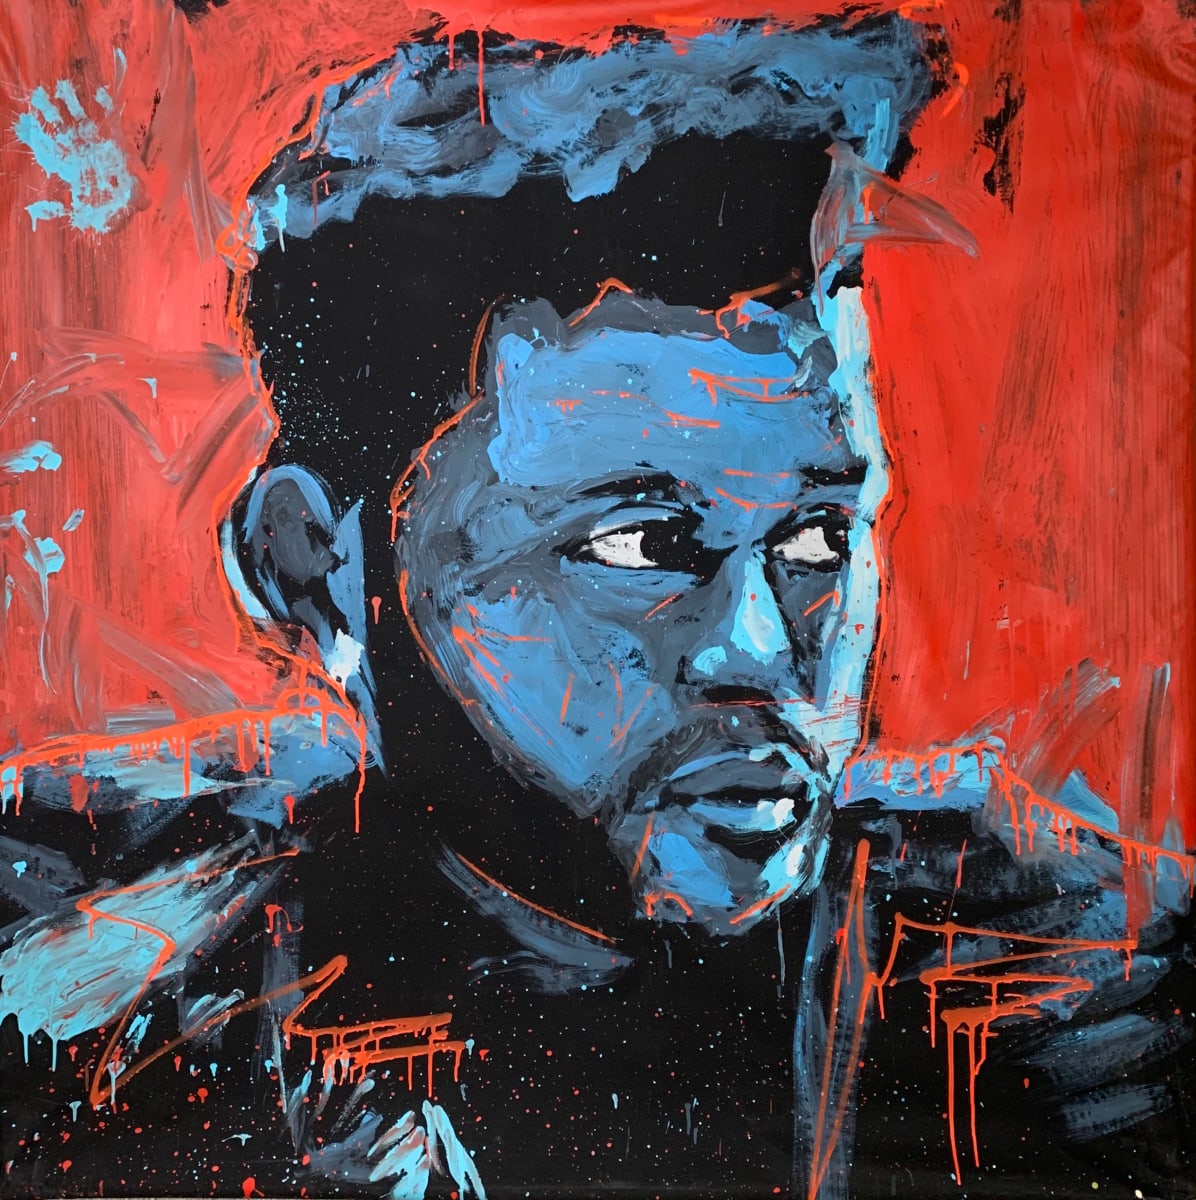 The Weeknd by David Garibaldi 